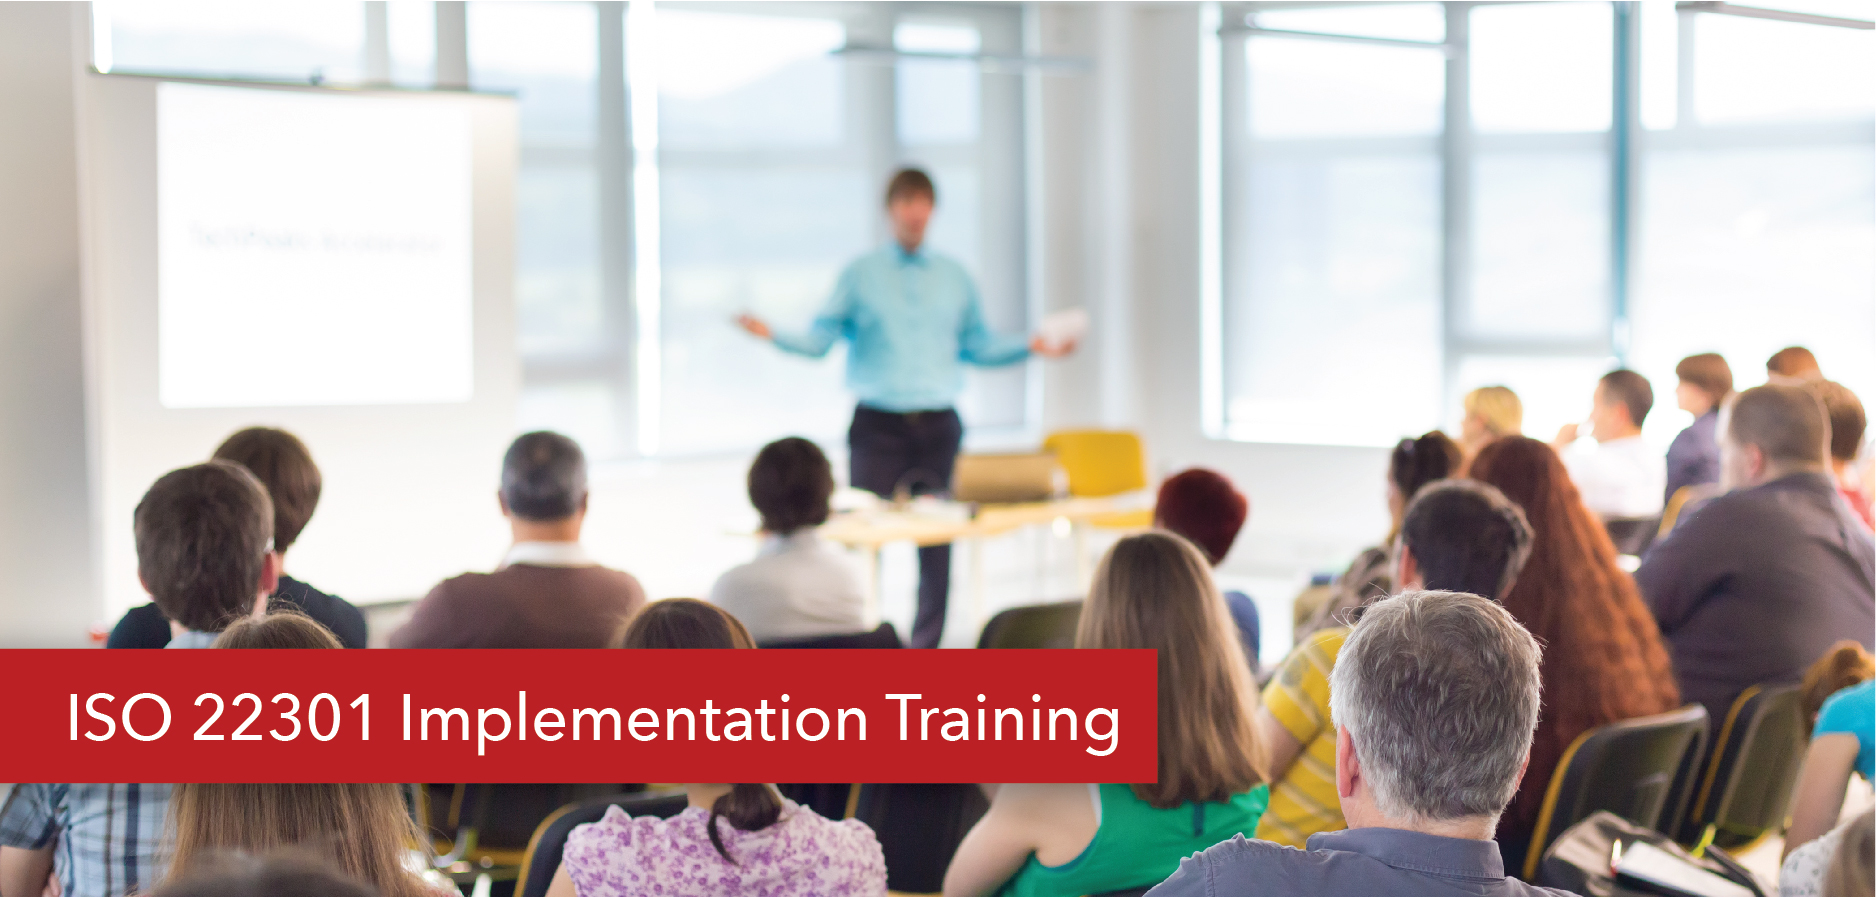 ISO 22301 Implementation Training